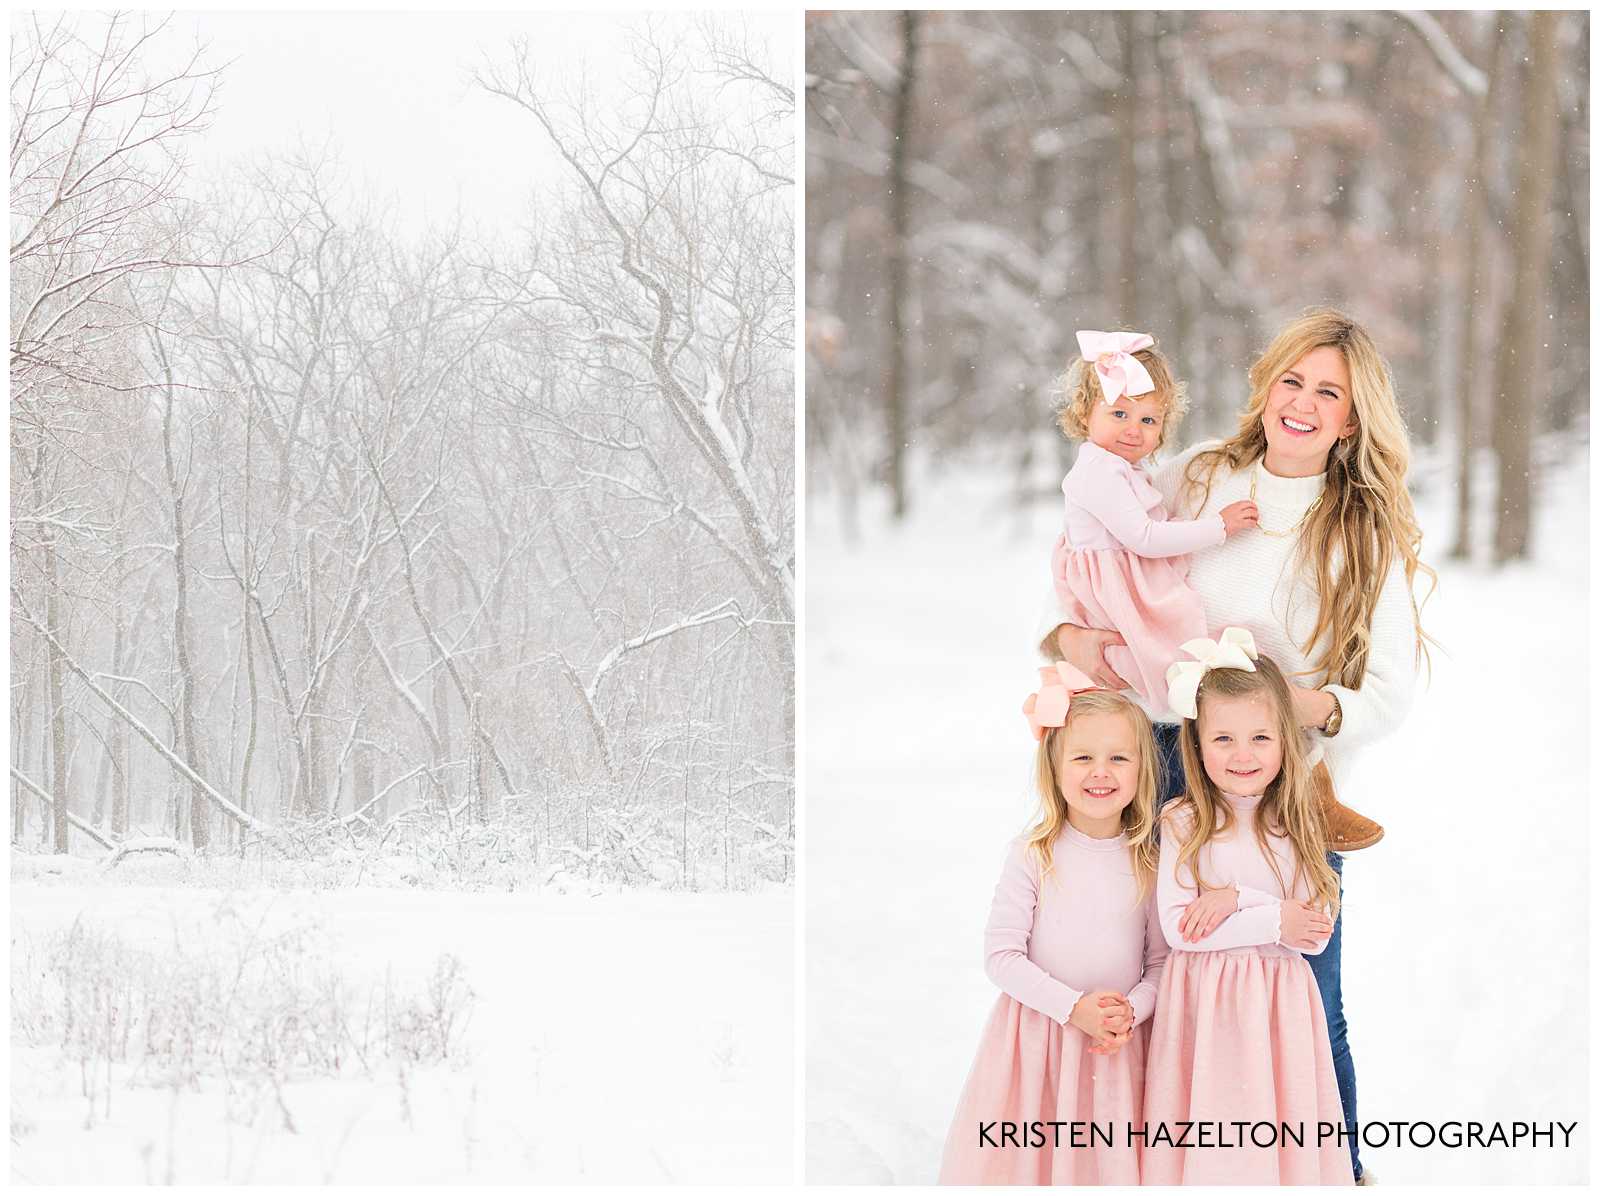 Mom and daughters at a Snowfall photoshoot